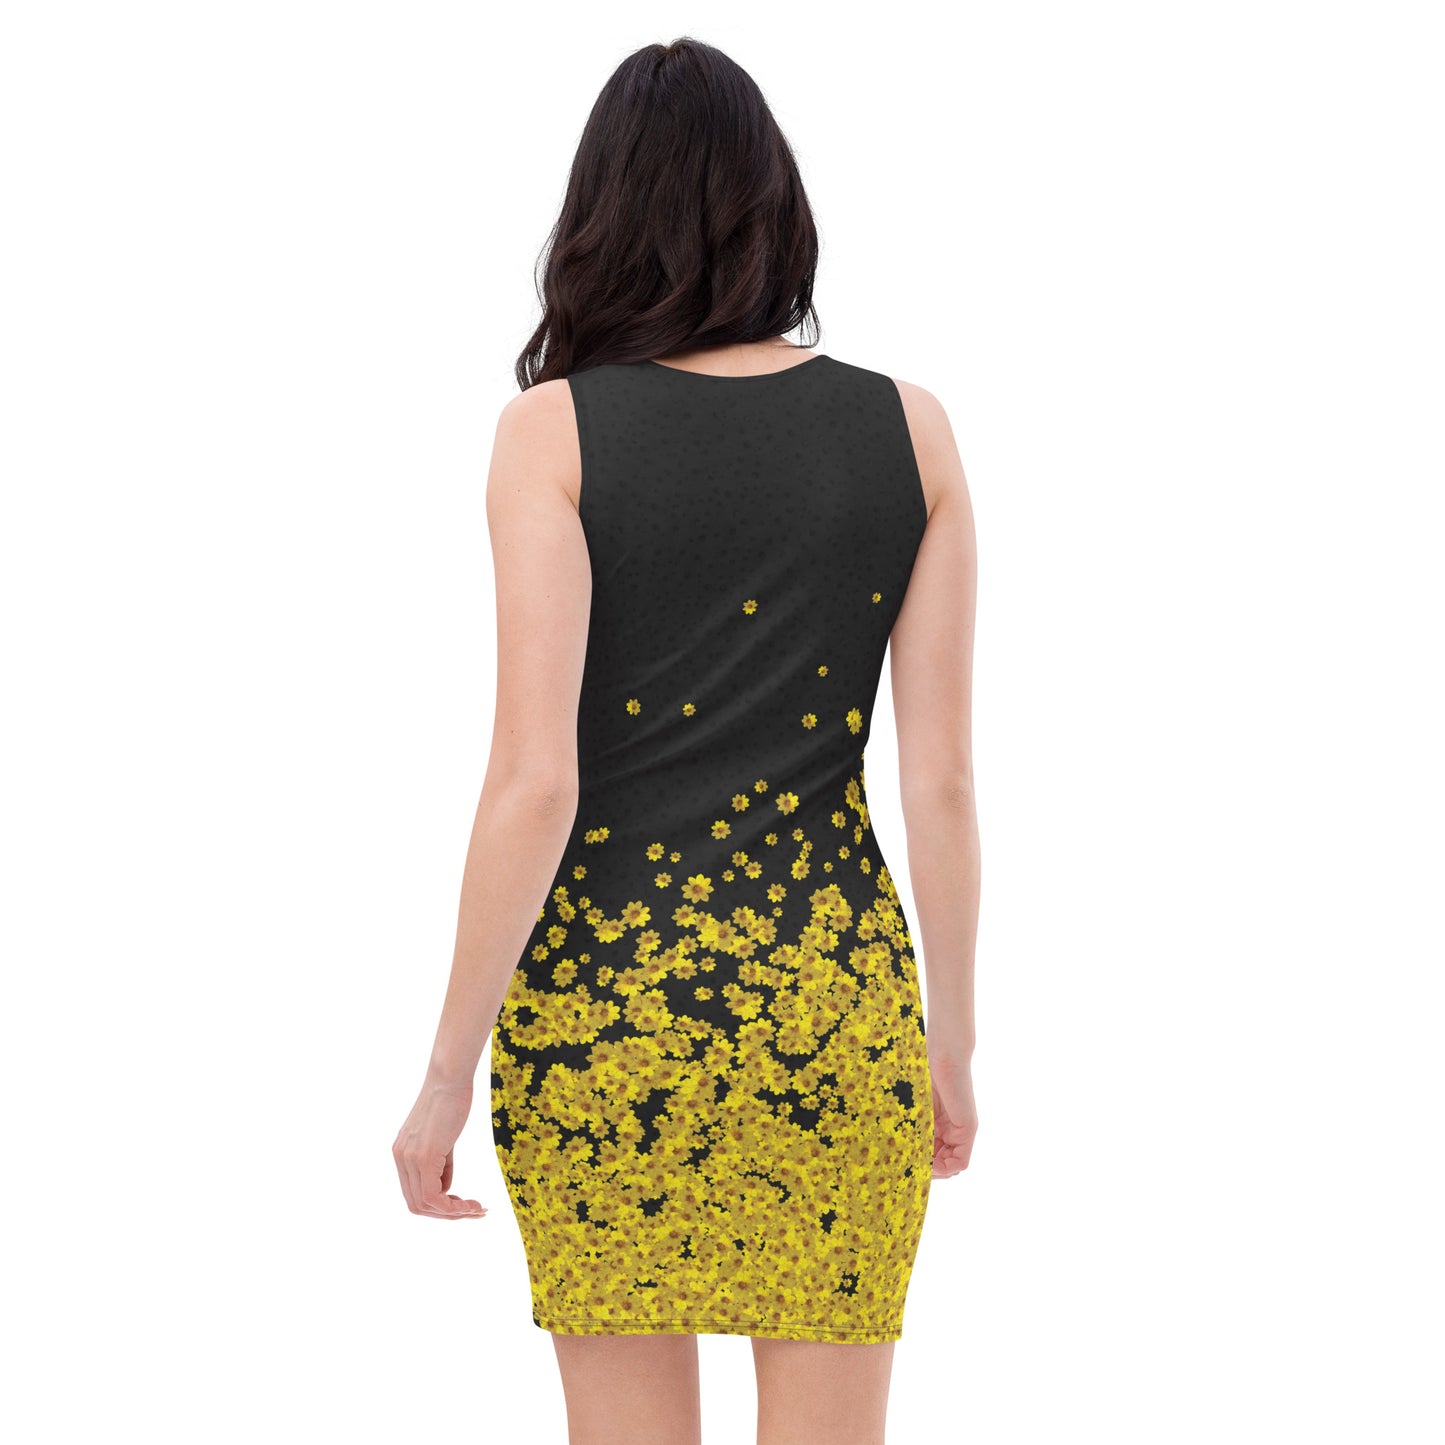 Adey Abeba | Yellow Daisy Flower All-Over Print Fitted Short Dress - Black - bukulu